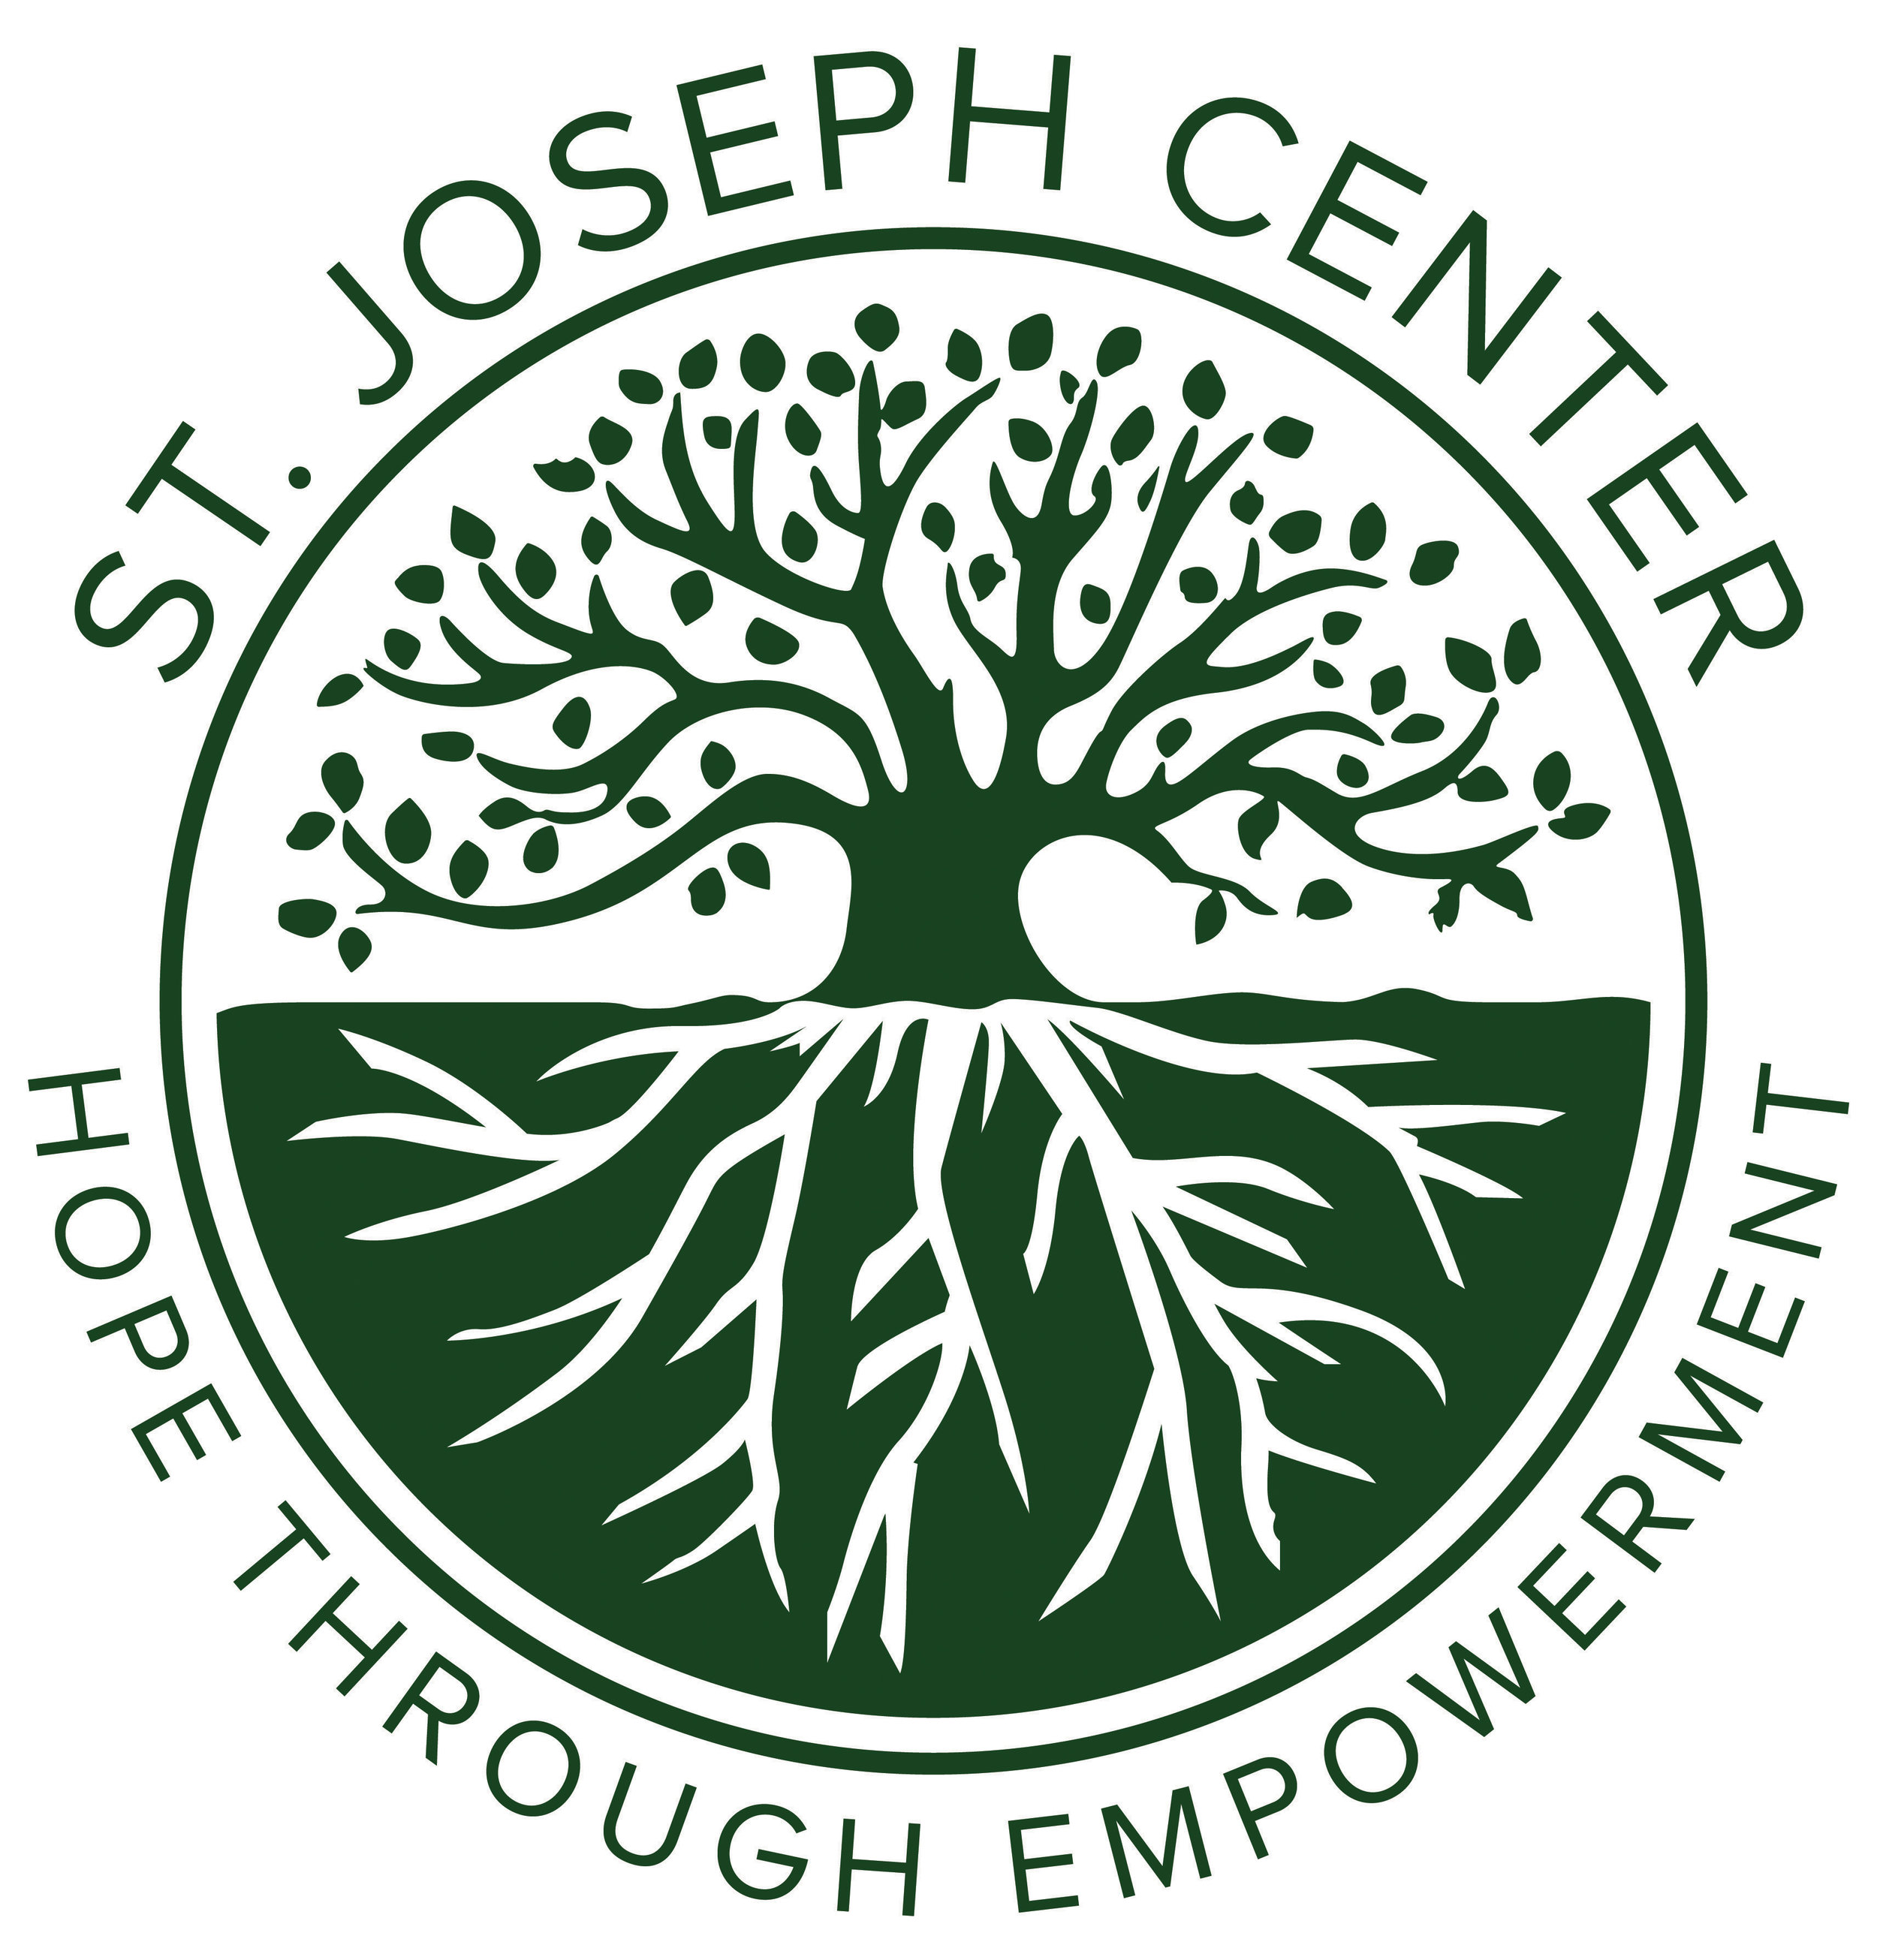 SJC Logo 2016 12 Megapixels Green LARGE.jpg